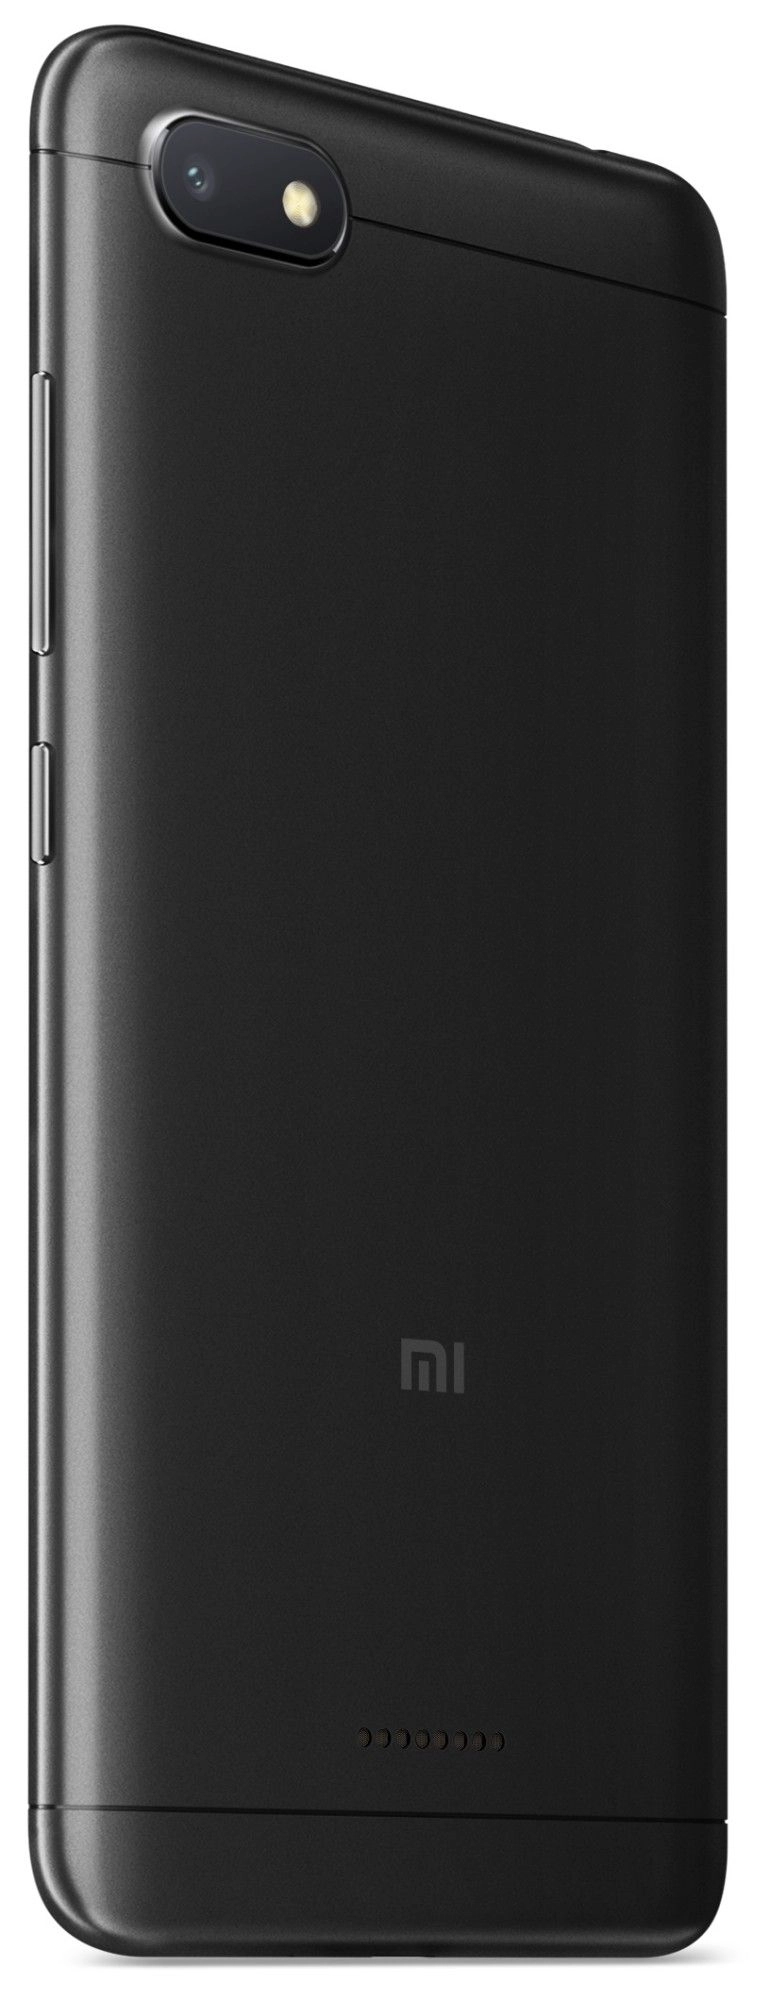 Купить Смартфон Xiaomi Redmi 6A 16Gb Black